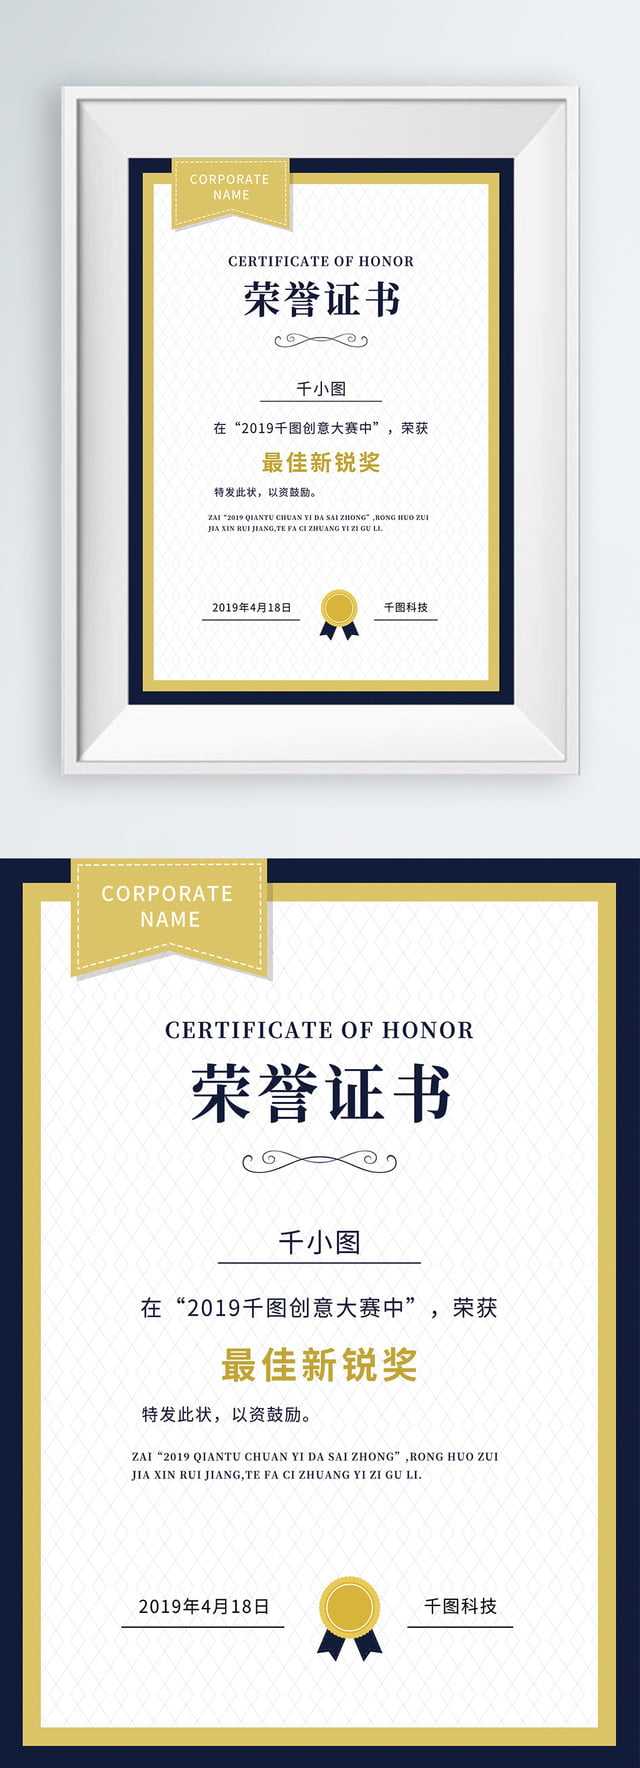 Certificate Authorization Certificate Certificate Of Honor Pertaining To Certificate Of Authorization Template